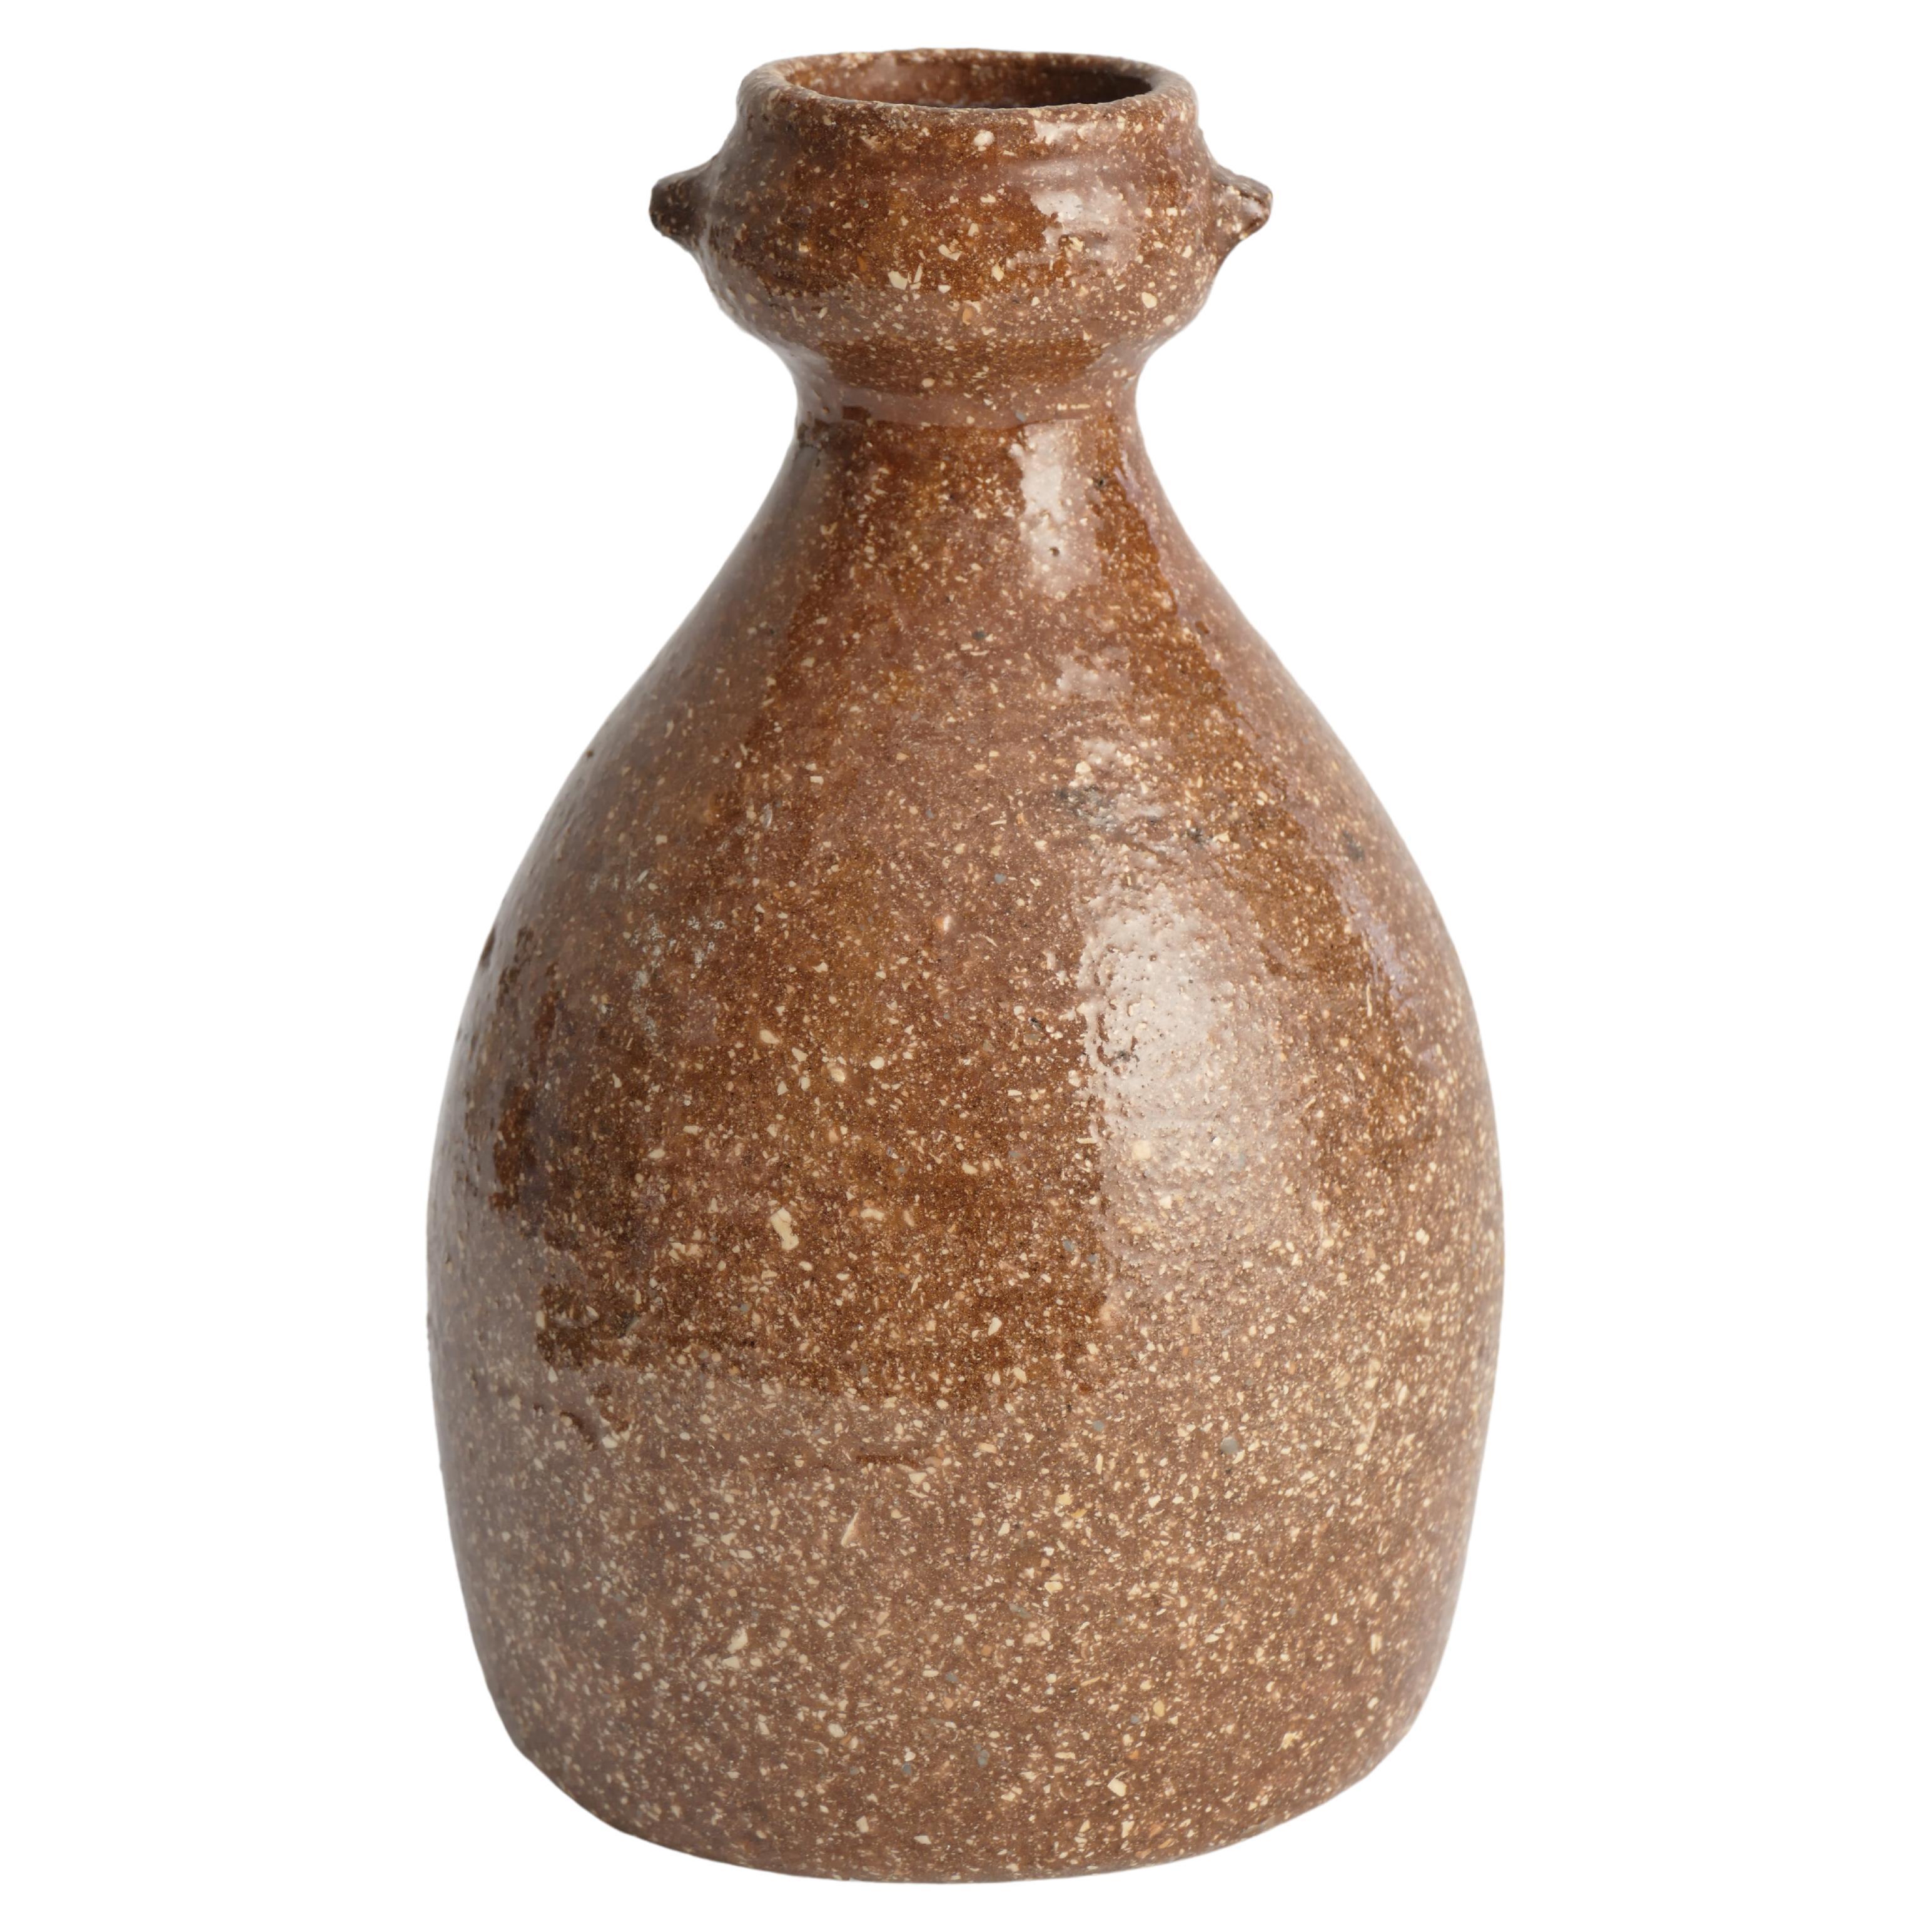 Japanese Shigaraki Inspired Handmade Stoneware Vase with Barnacle-Like Texture For Sale